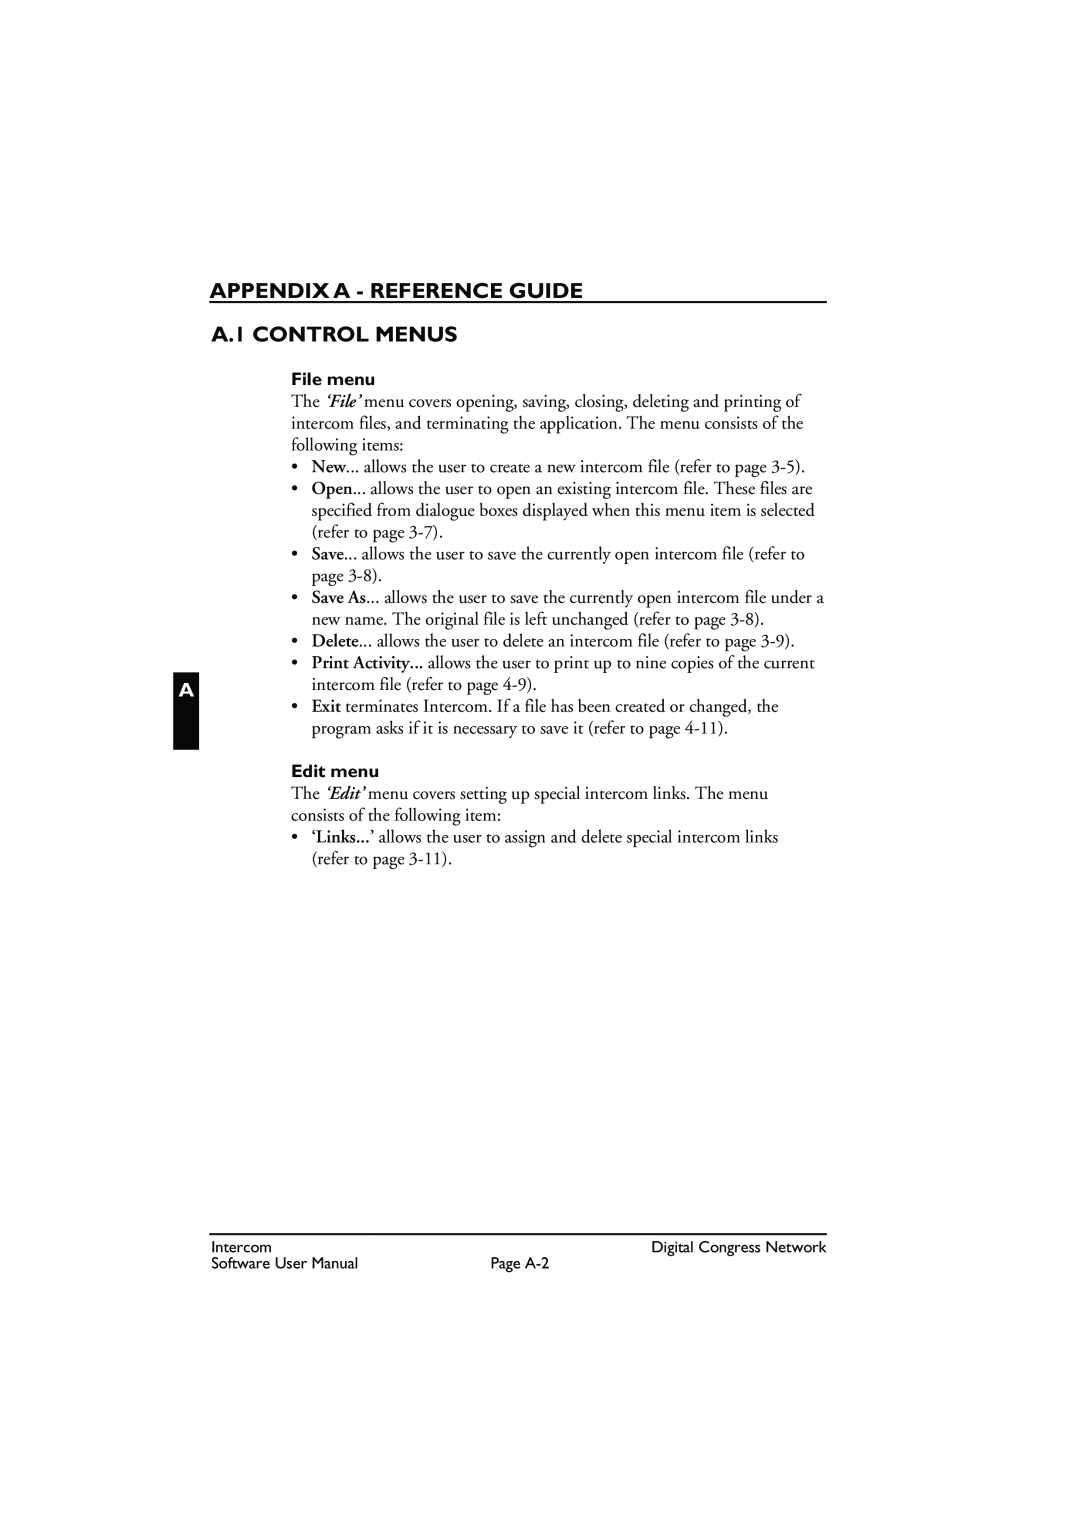 Bosch Appliances LBB 3573 user manual APPENDIX A - REFERENCE GUIDE A.1 CONTROL MENUS, File menu, Edit menu 